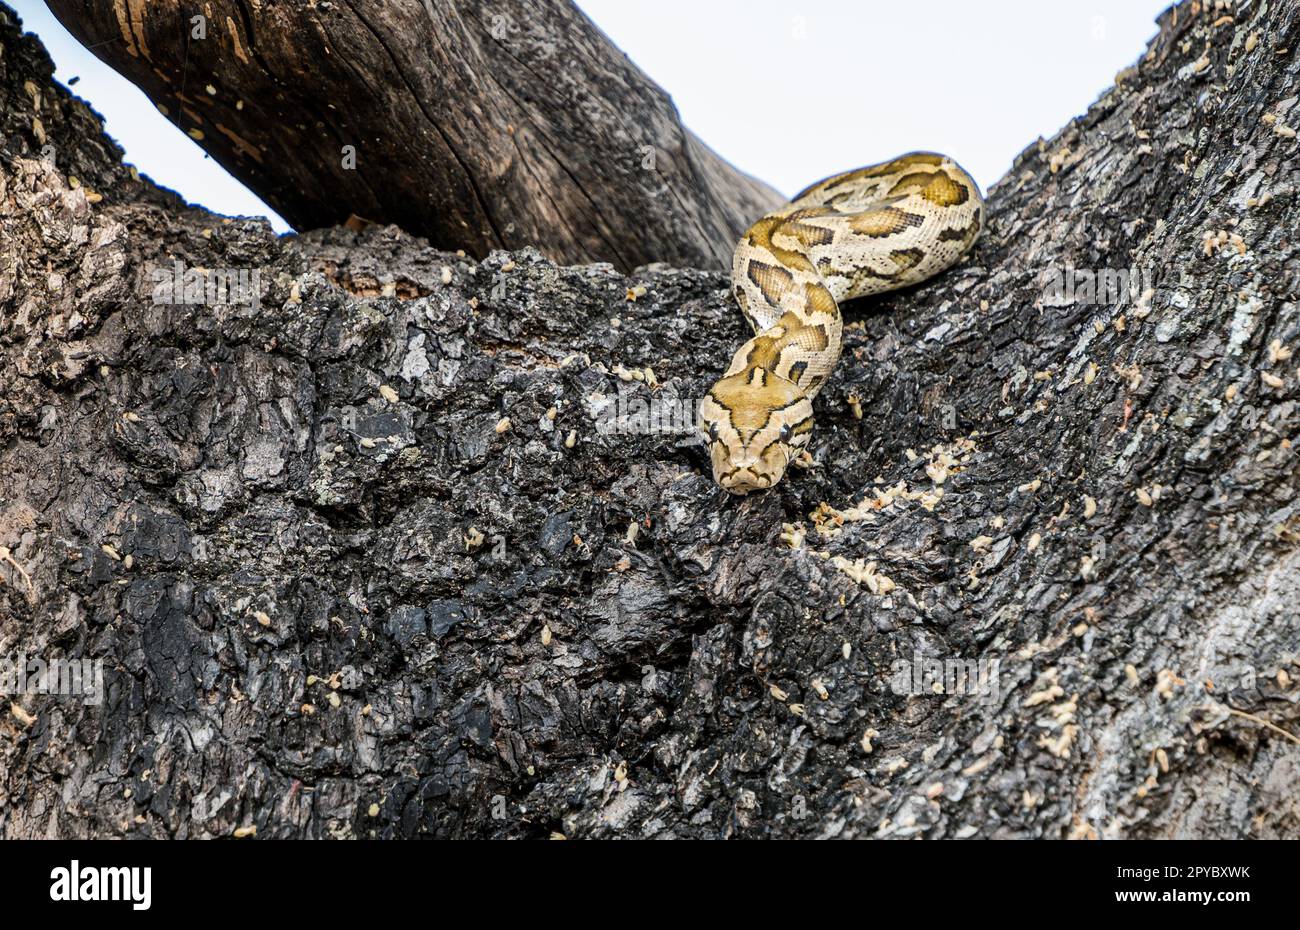 A Central African rock python snake (Python sebae) on a tree branch, Okavanga Delta, Botswana, Africa Stock Photo